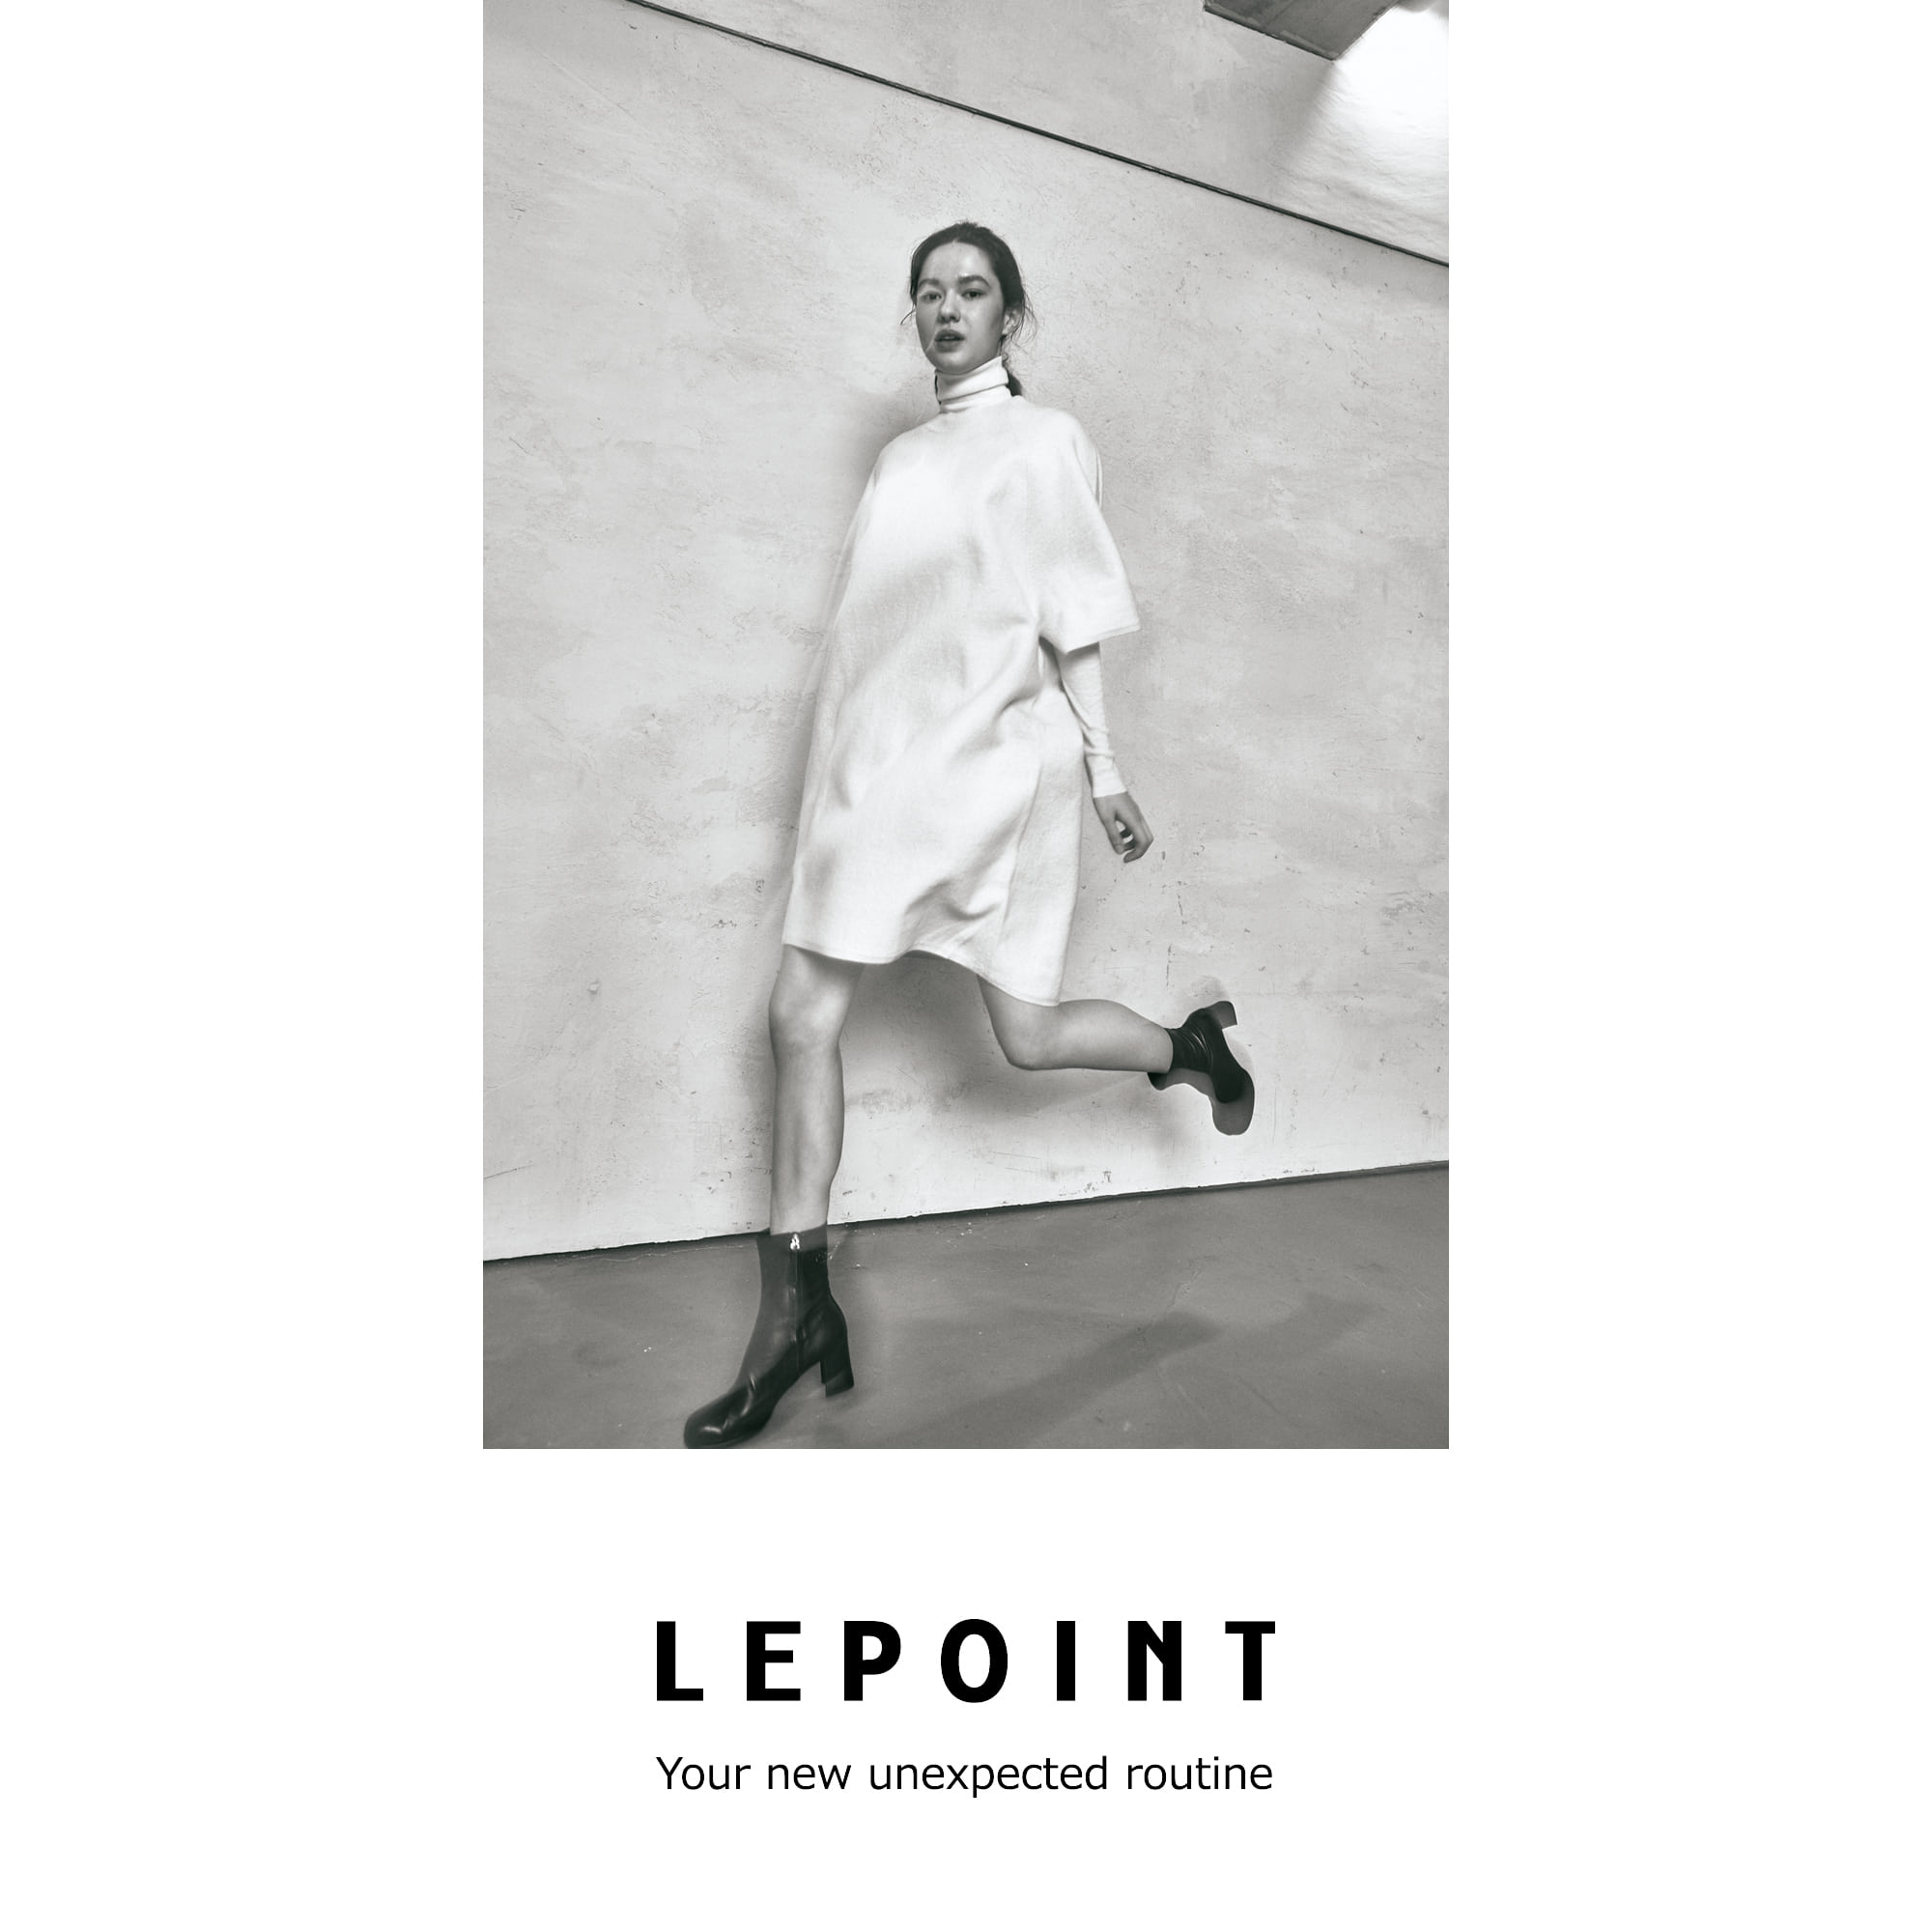 LEPOINT, designer shoes brand